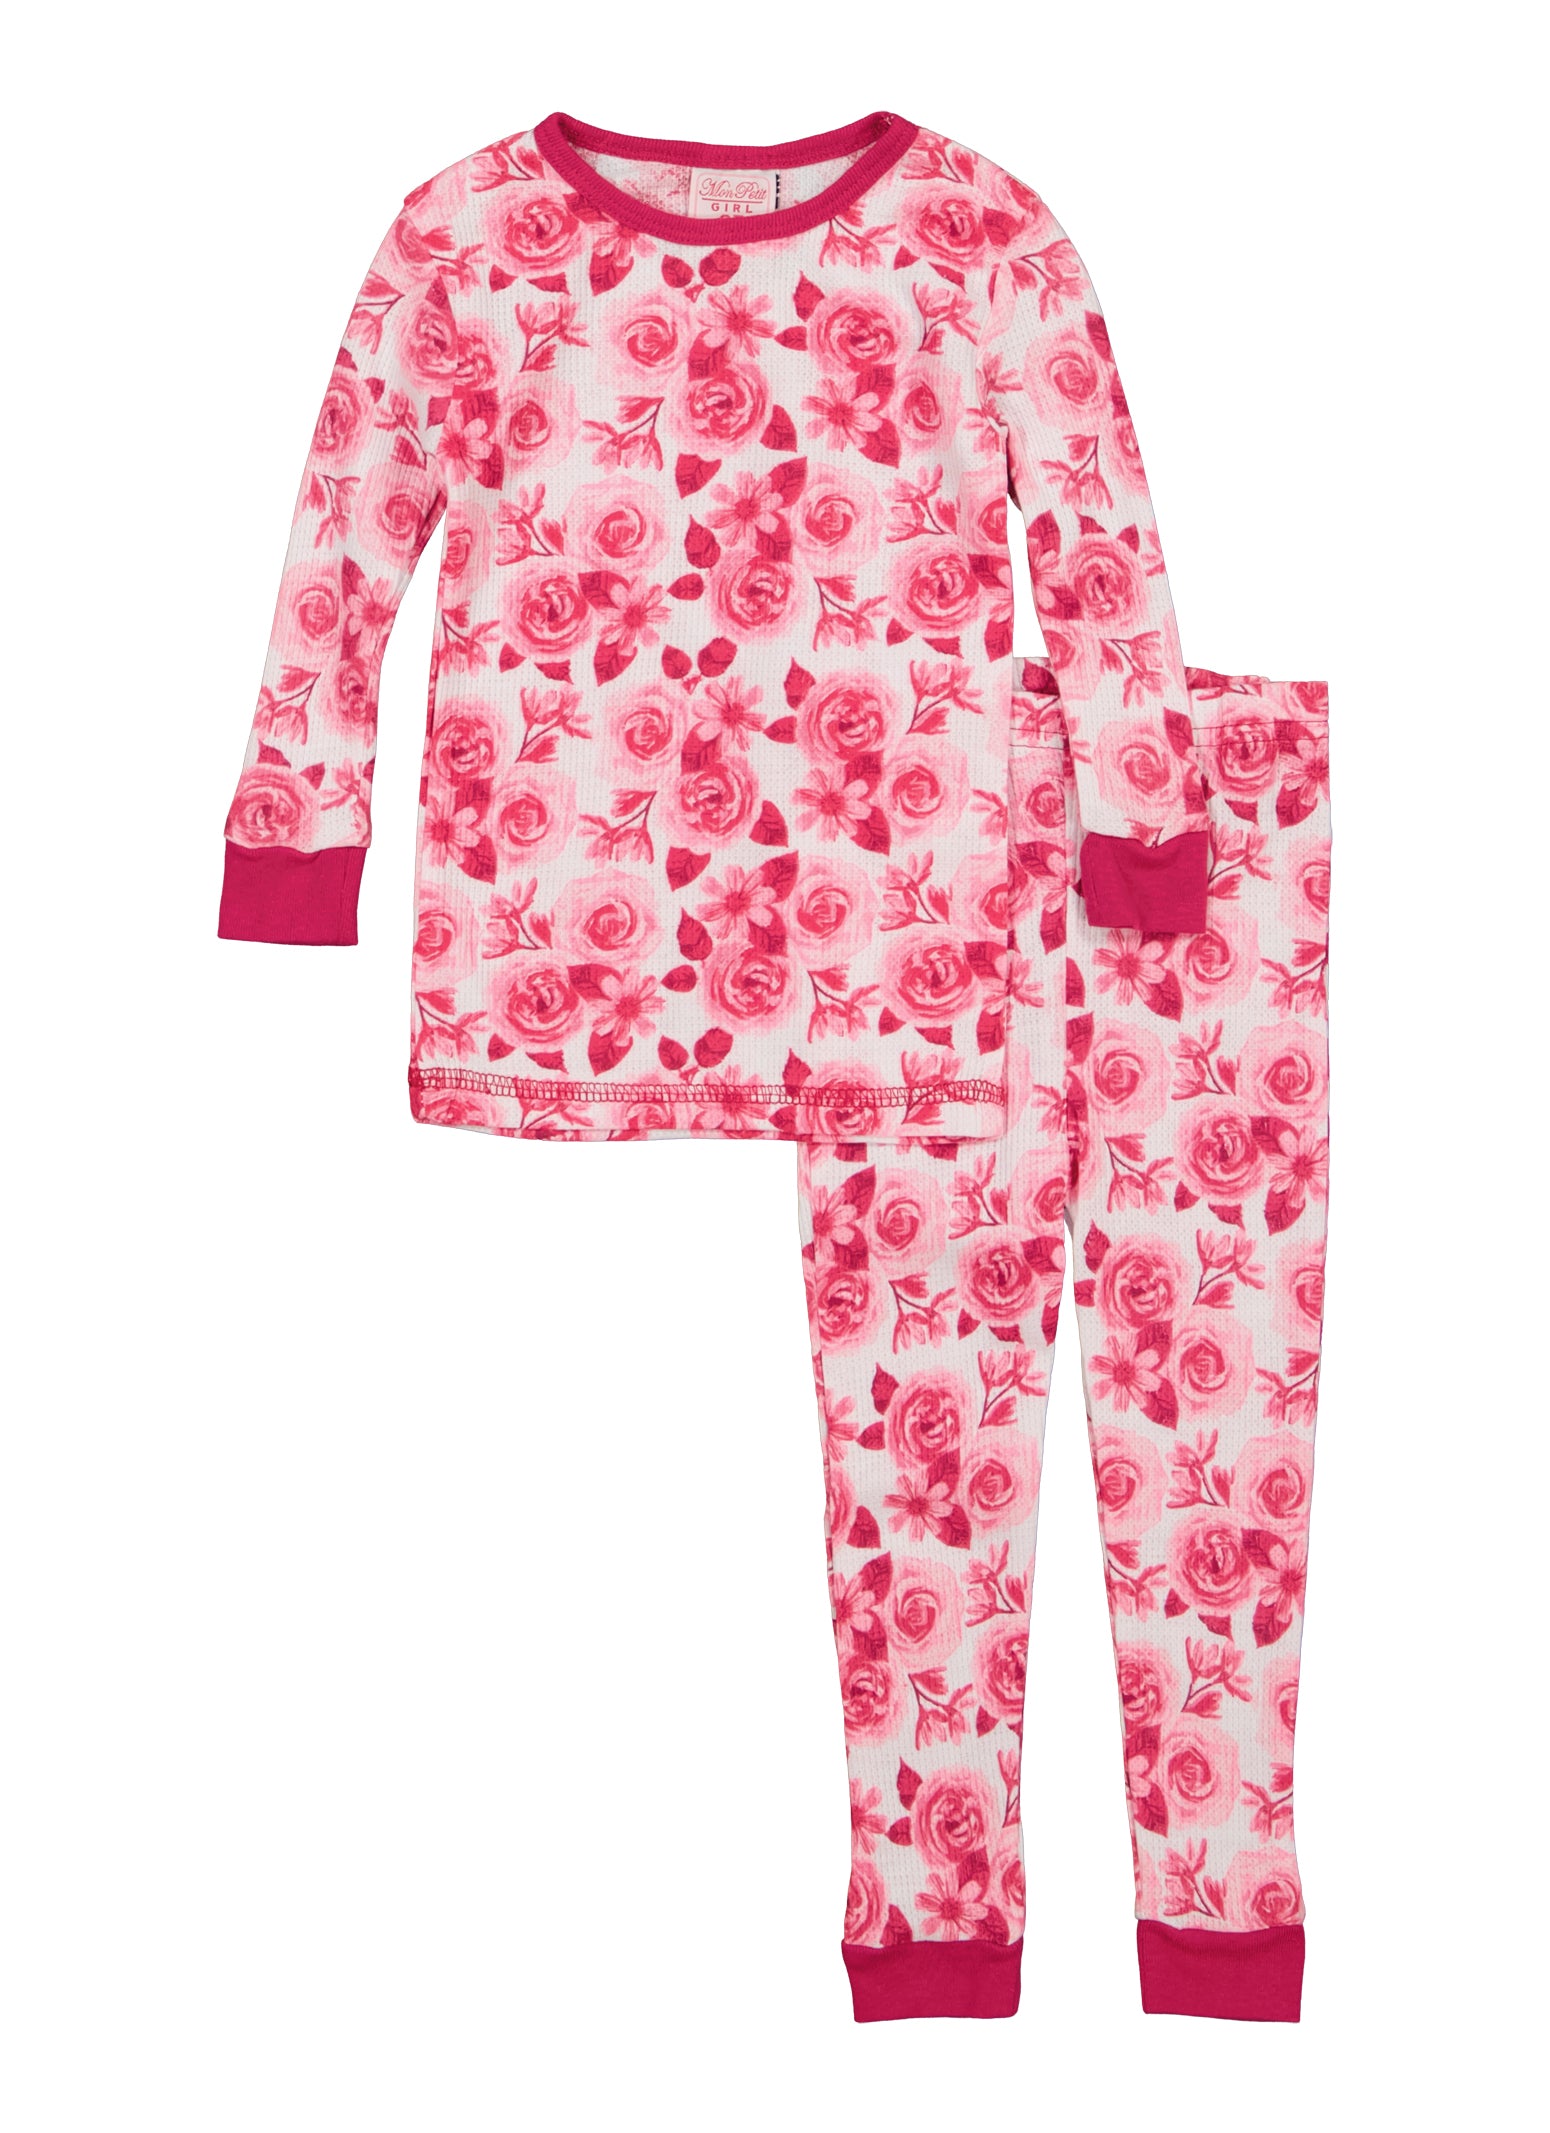 Toddler Girls Graphic Print Thermal Pajama Top and Pants